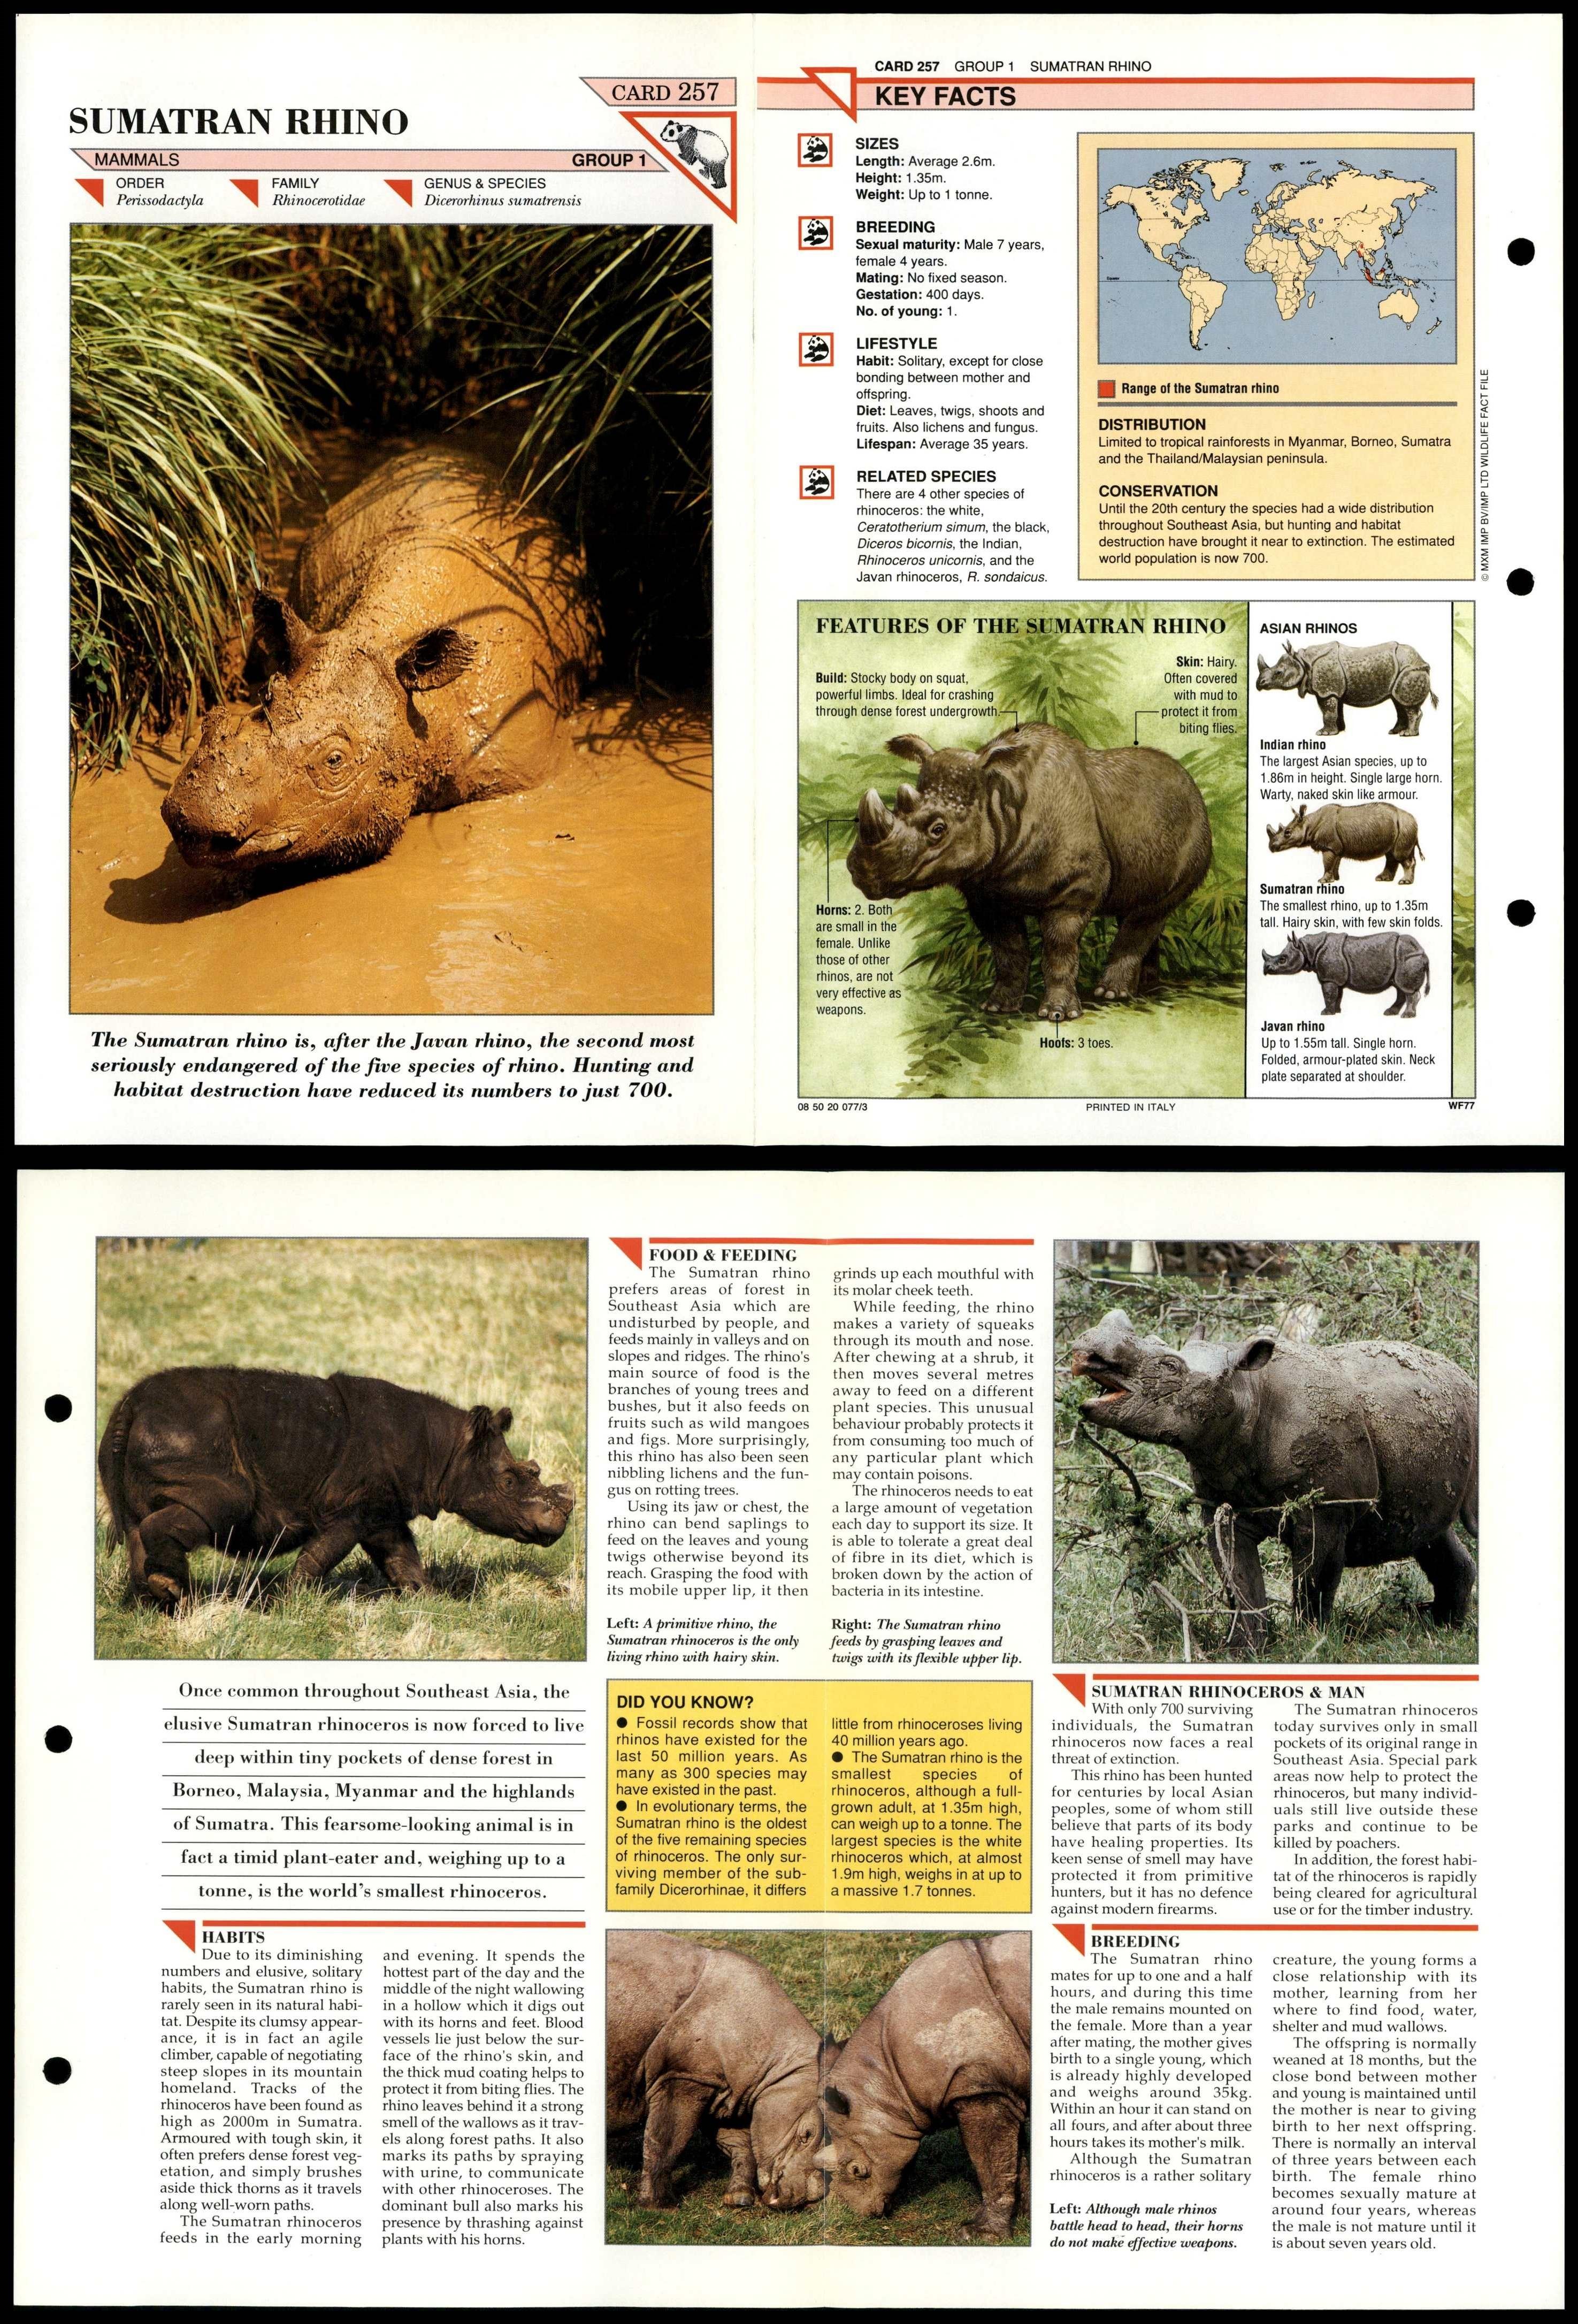 Sumatran Rhino #257 Mammals Wildlife Fact File Fold-Out Card